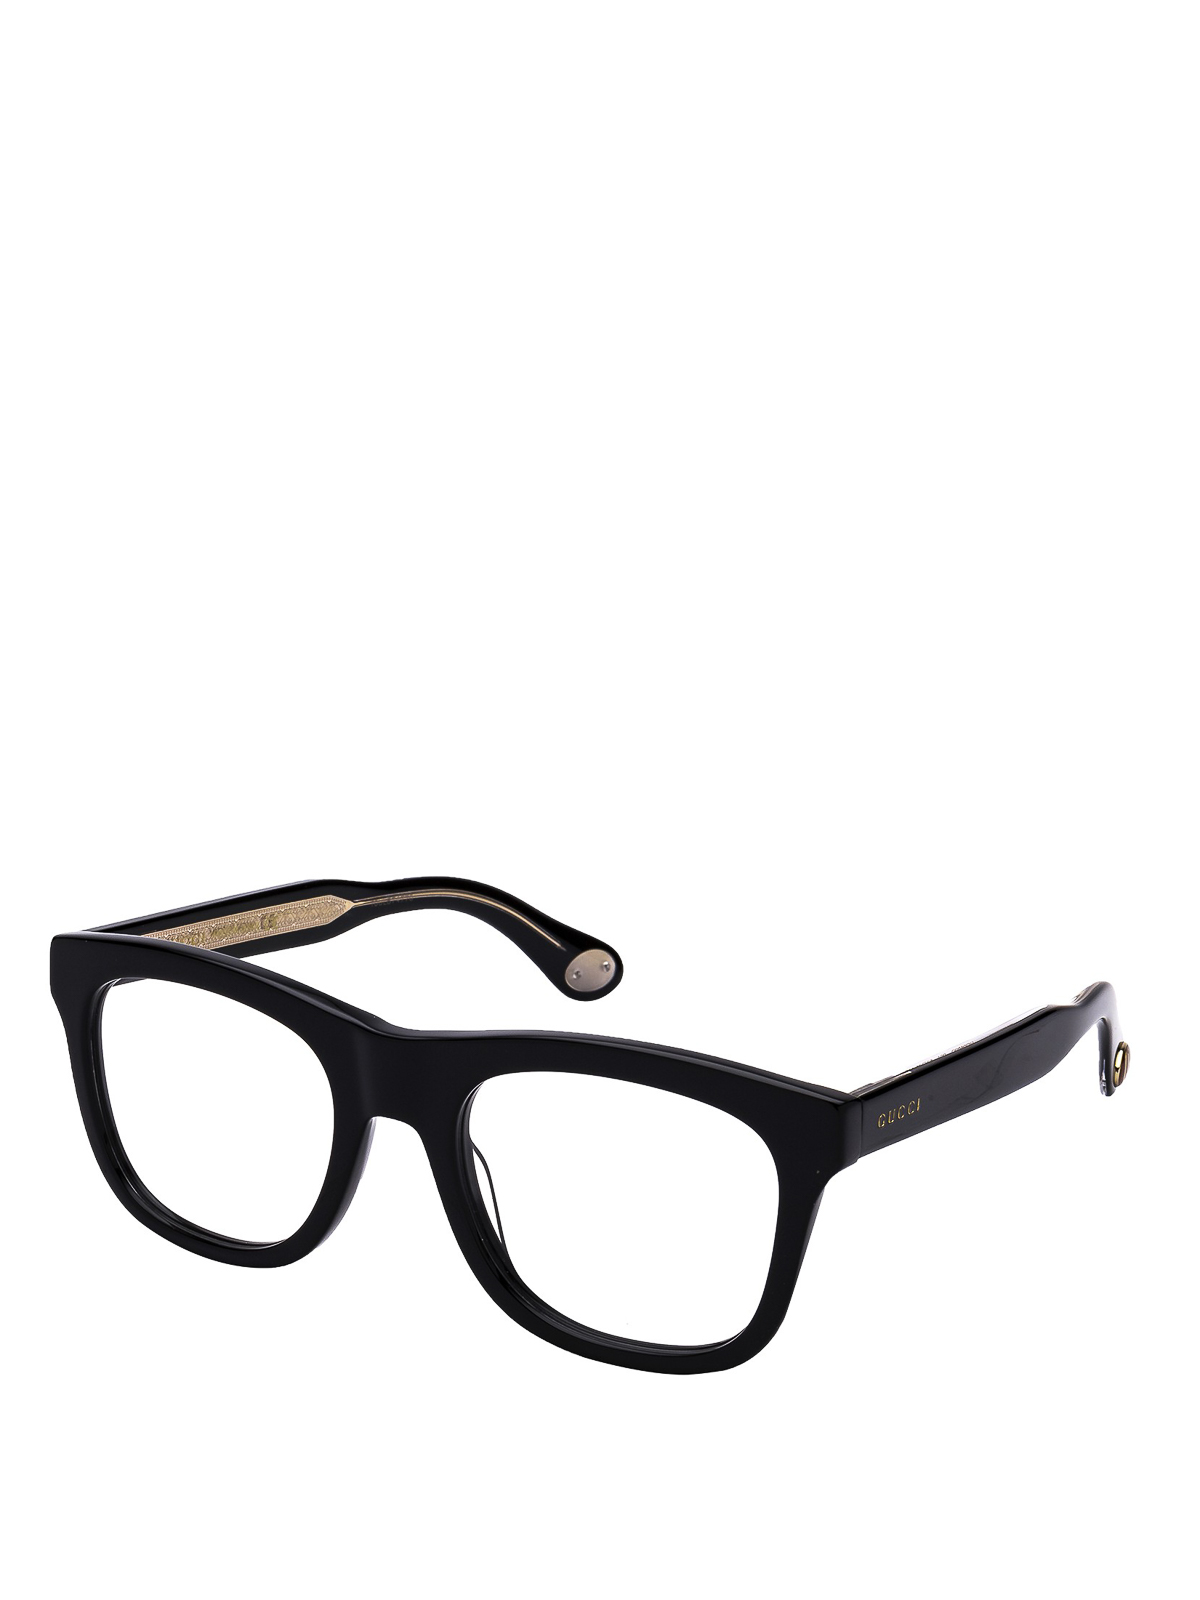 Gucci - Black square frame eyeglasses 